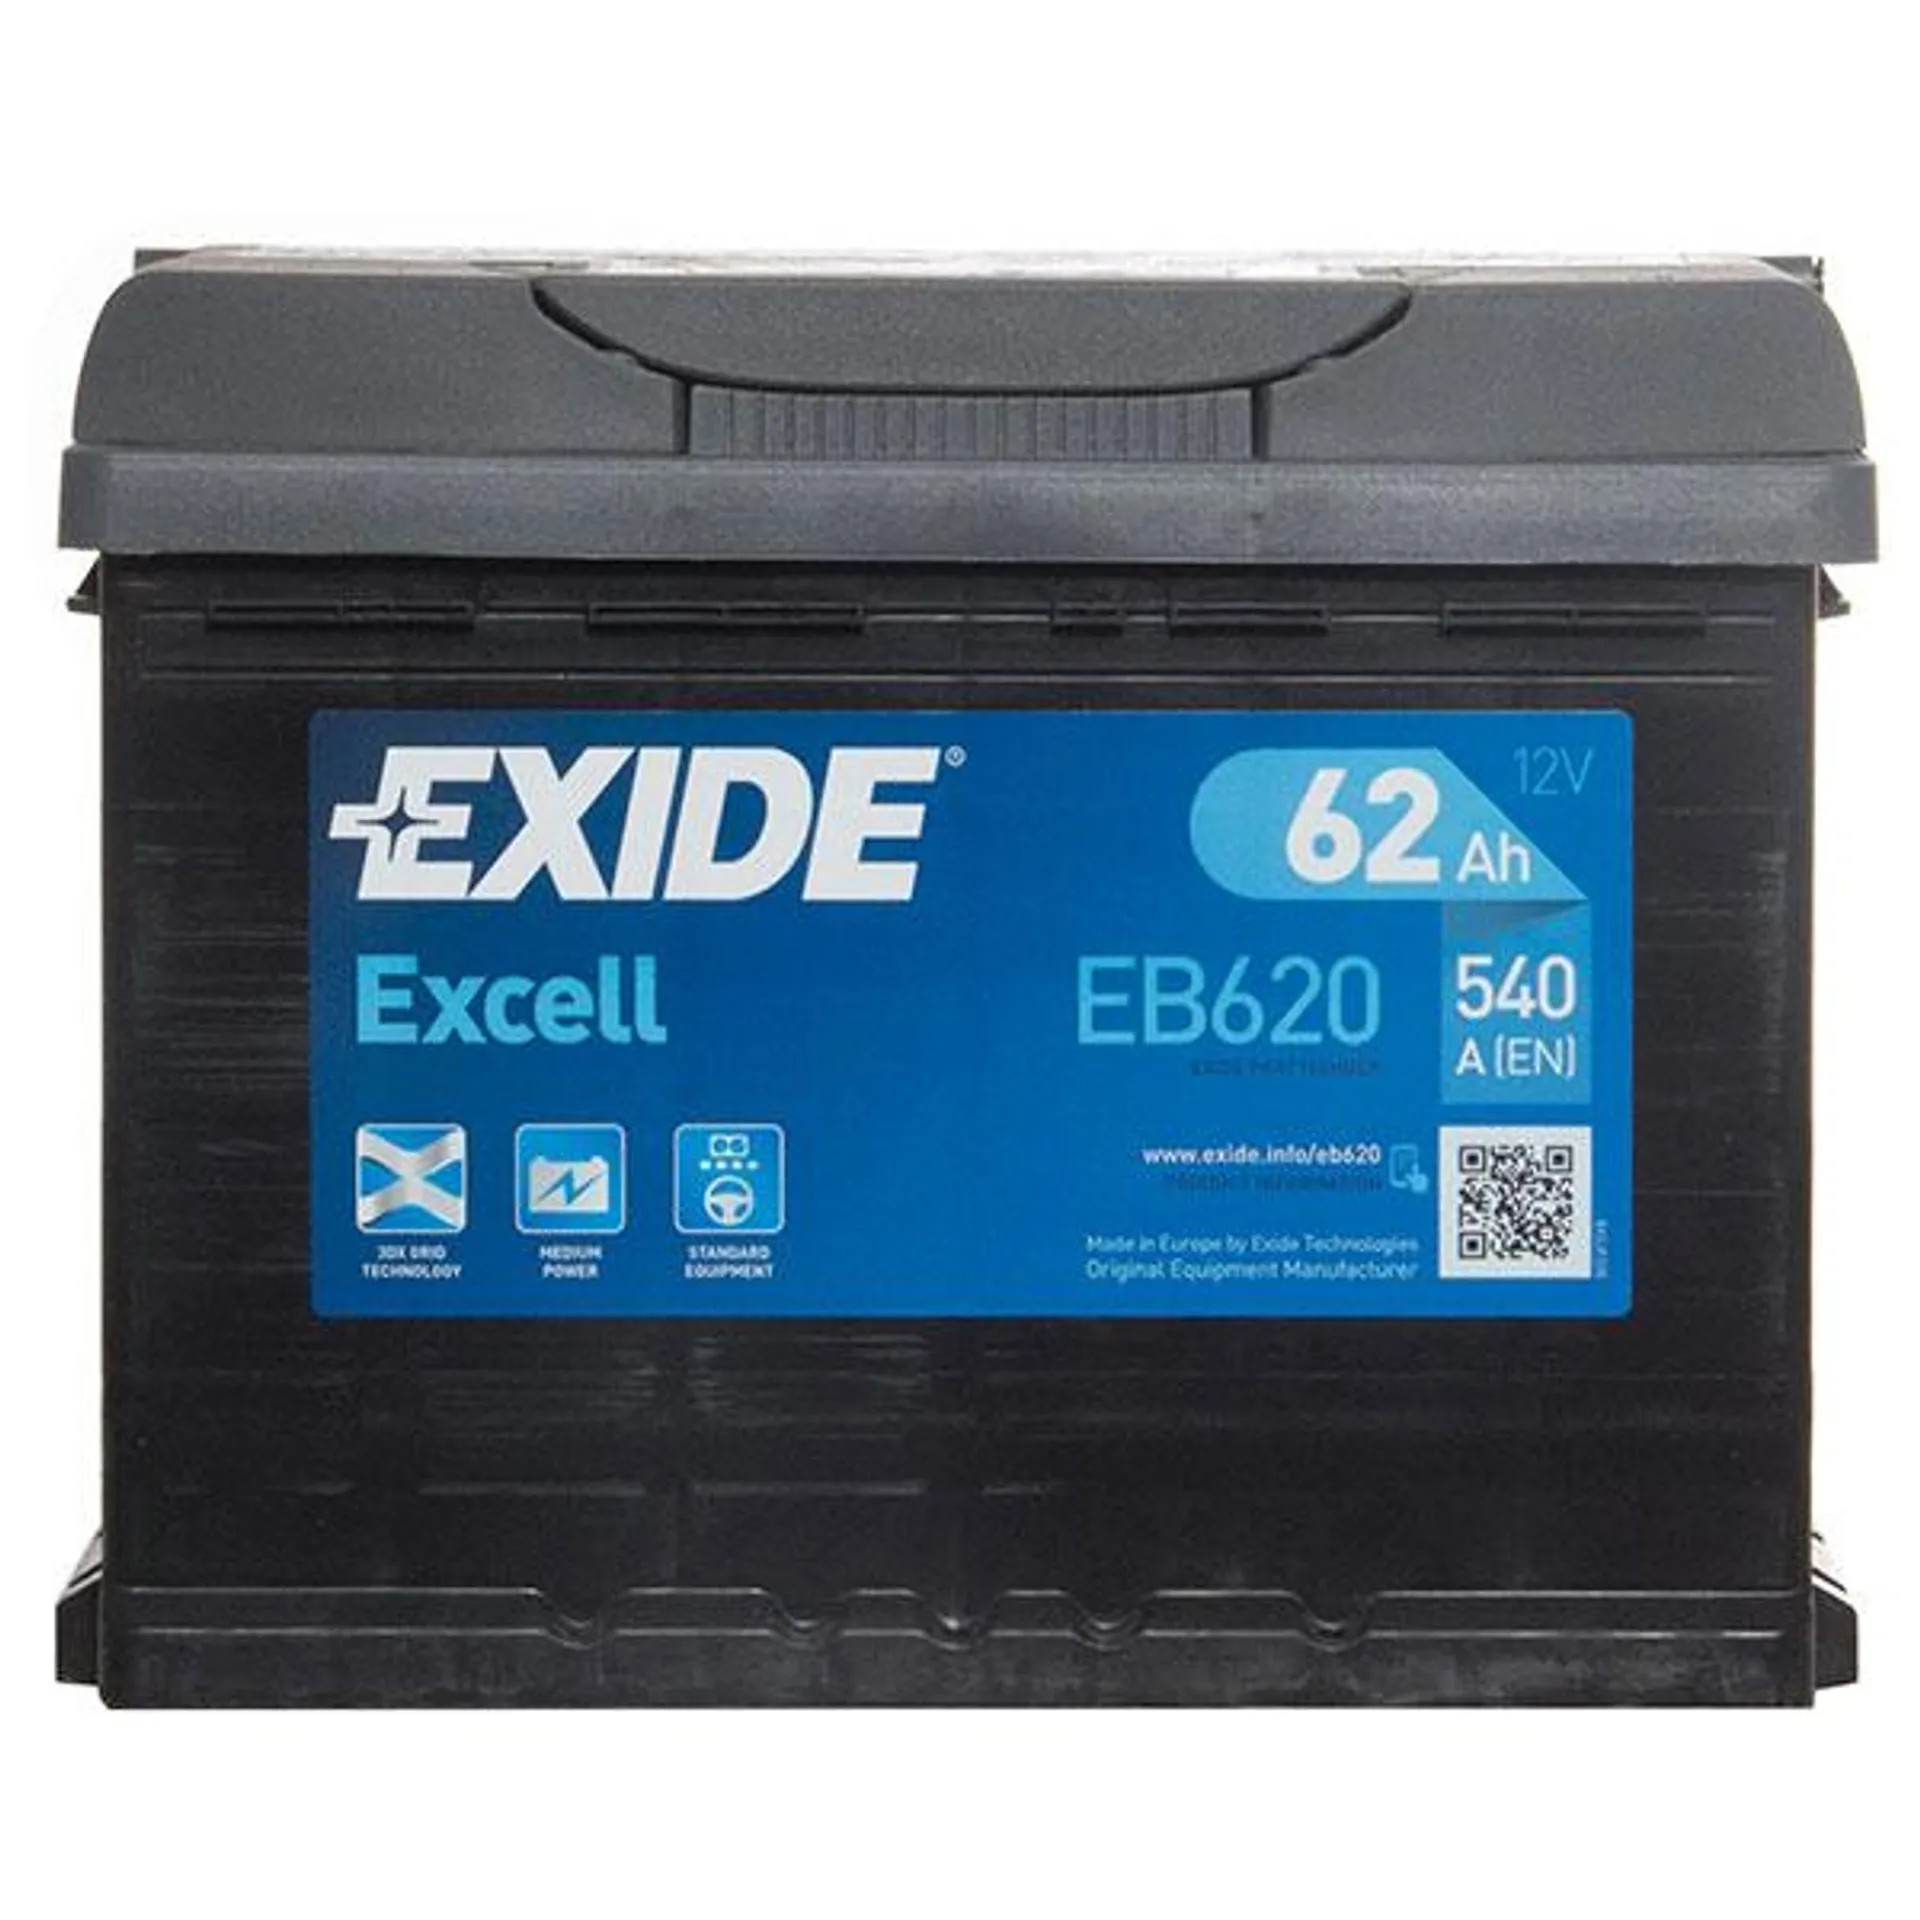 Exide Excel 027 Car Battery - 3 Year Guarantee